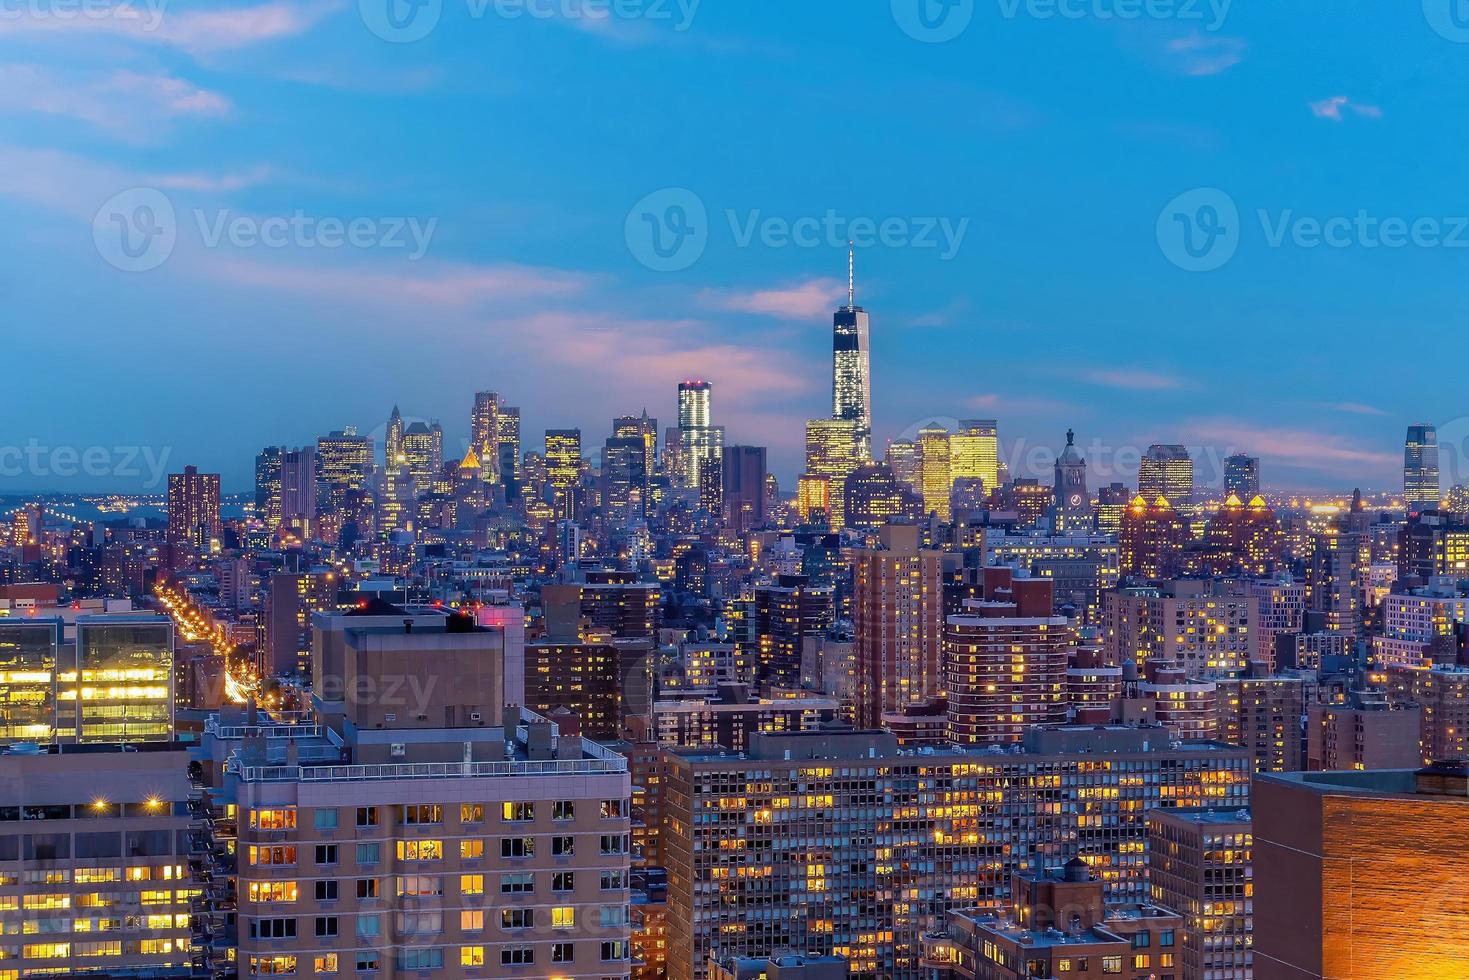 Manhattan ciudad horizonte paisaje urbano de nuevo York desde parte superior ver foto